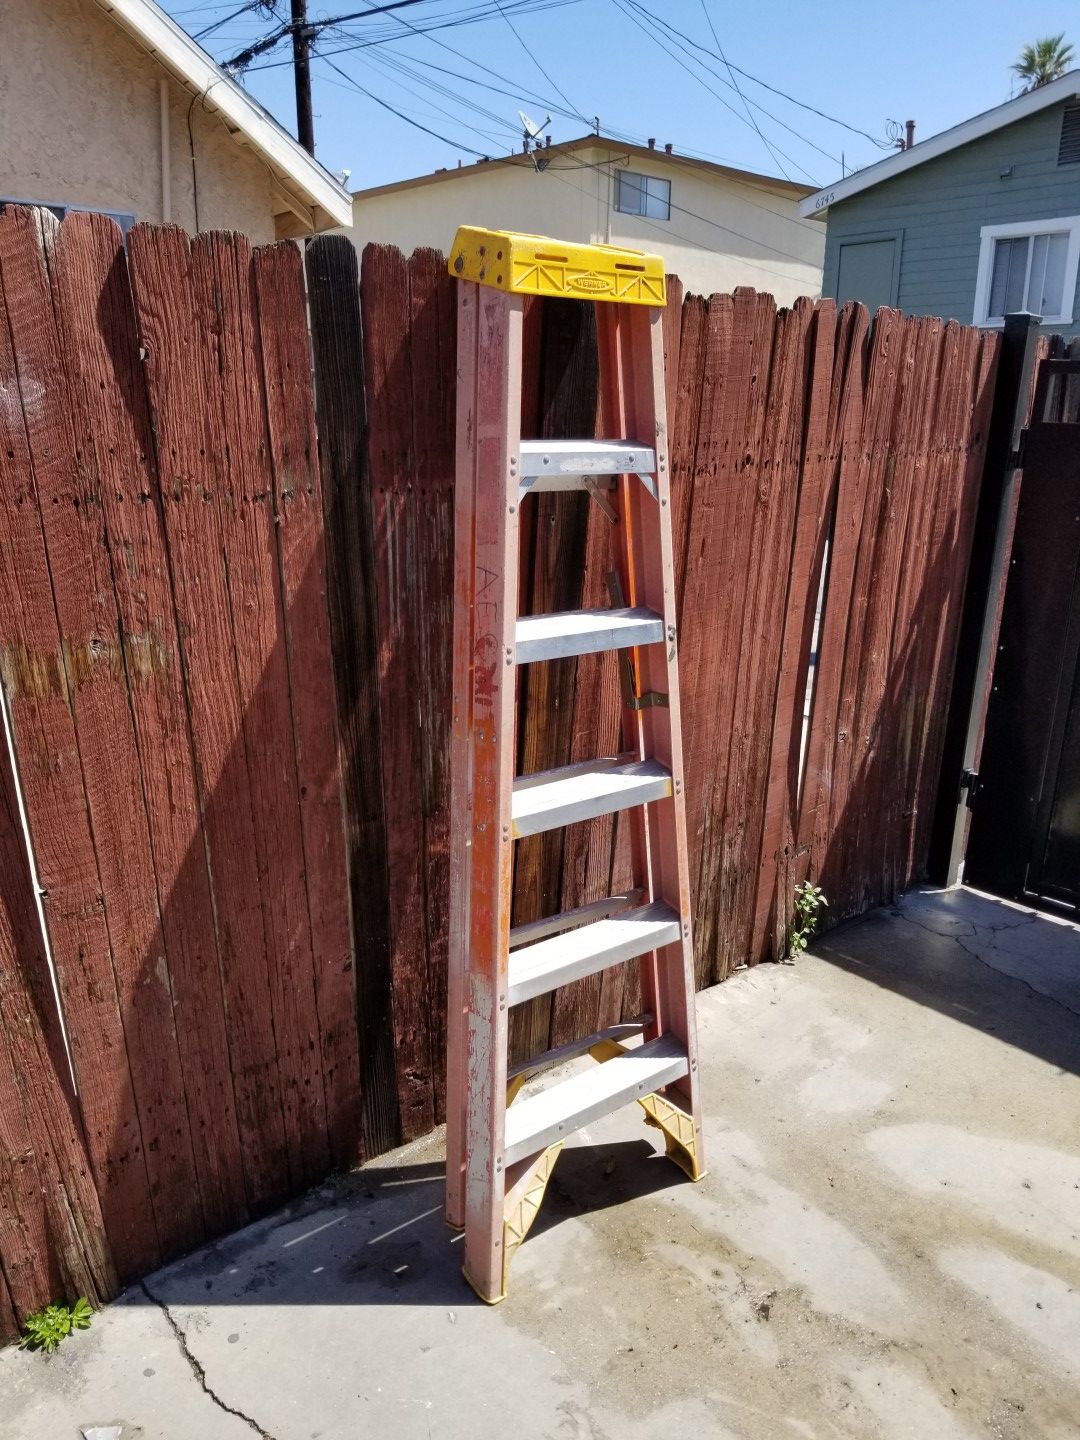 Ladder/ Escalera